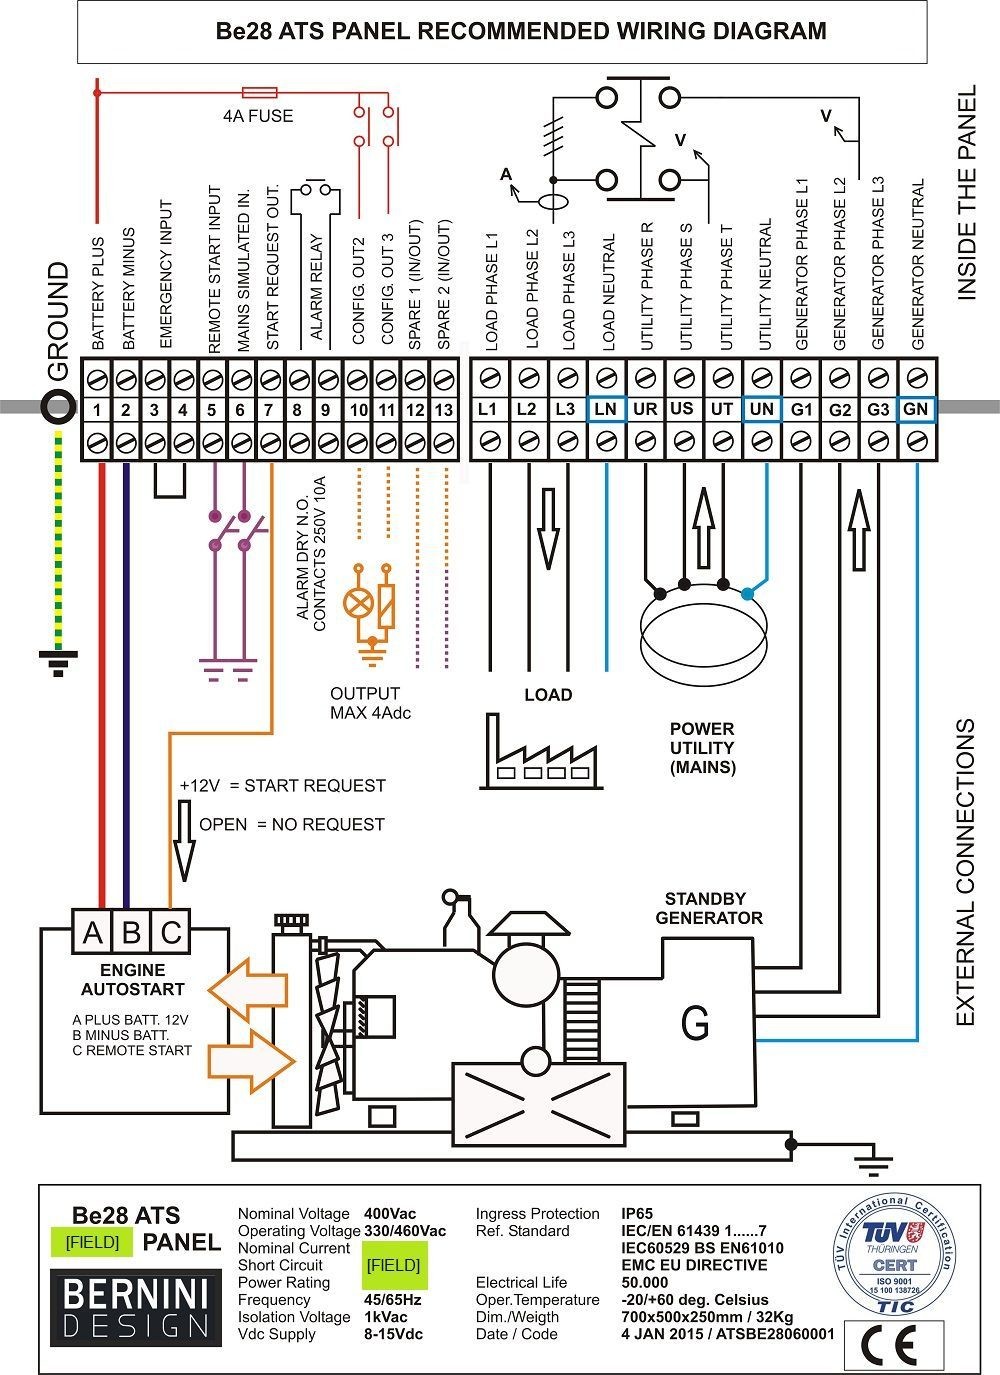 generac wiring diagram for transfer switch automotive wiring diagram u2022 rh nfluencer co generac automatic transfer switch wiring diagram generac transfer